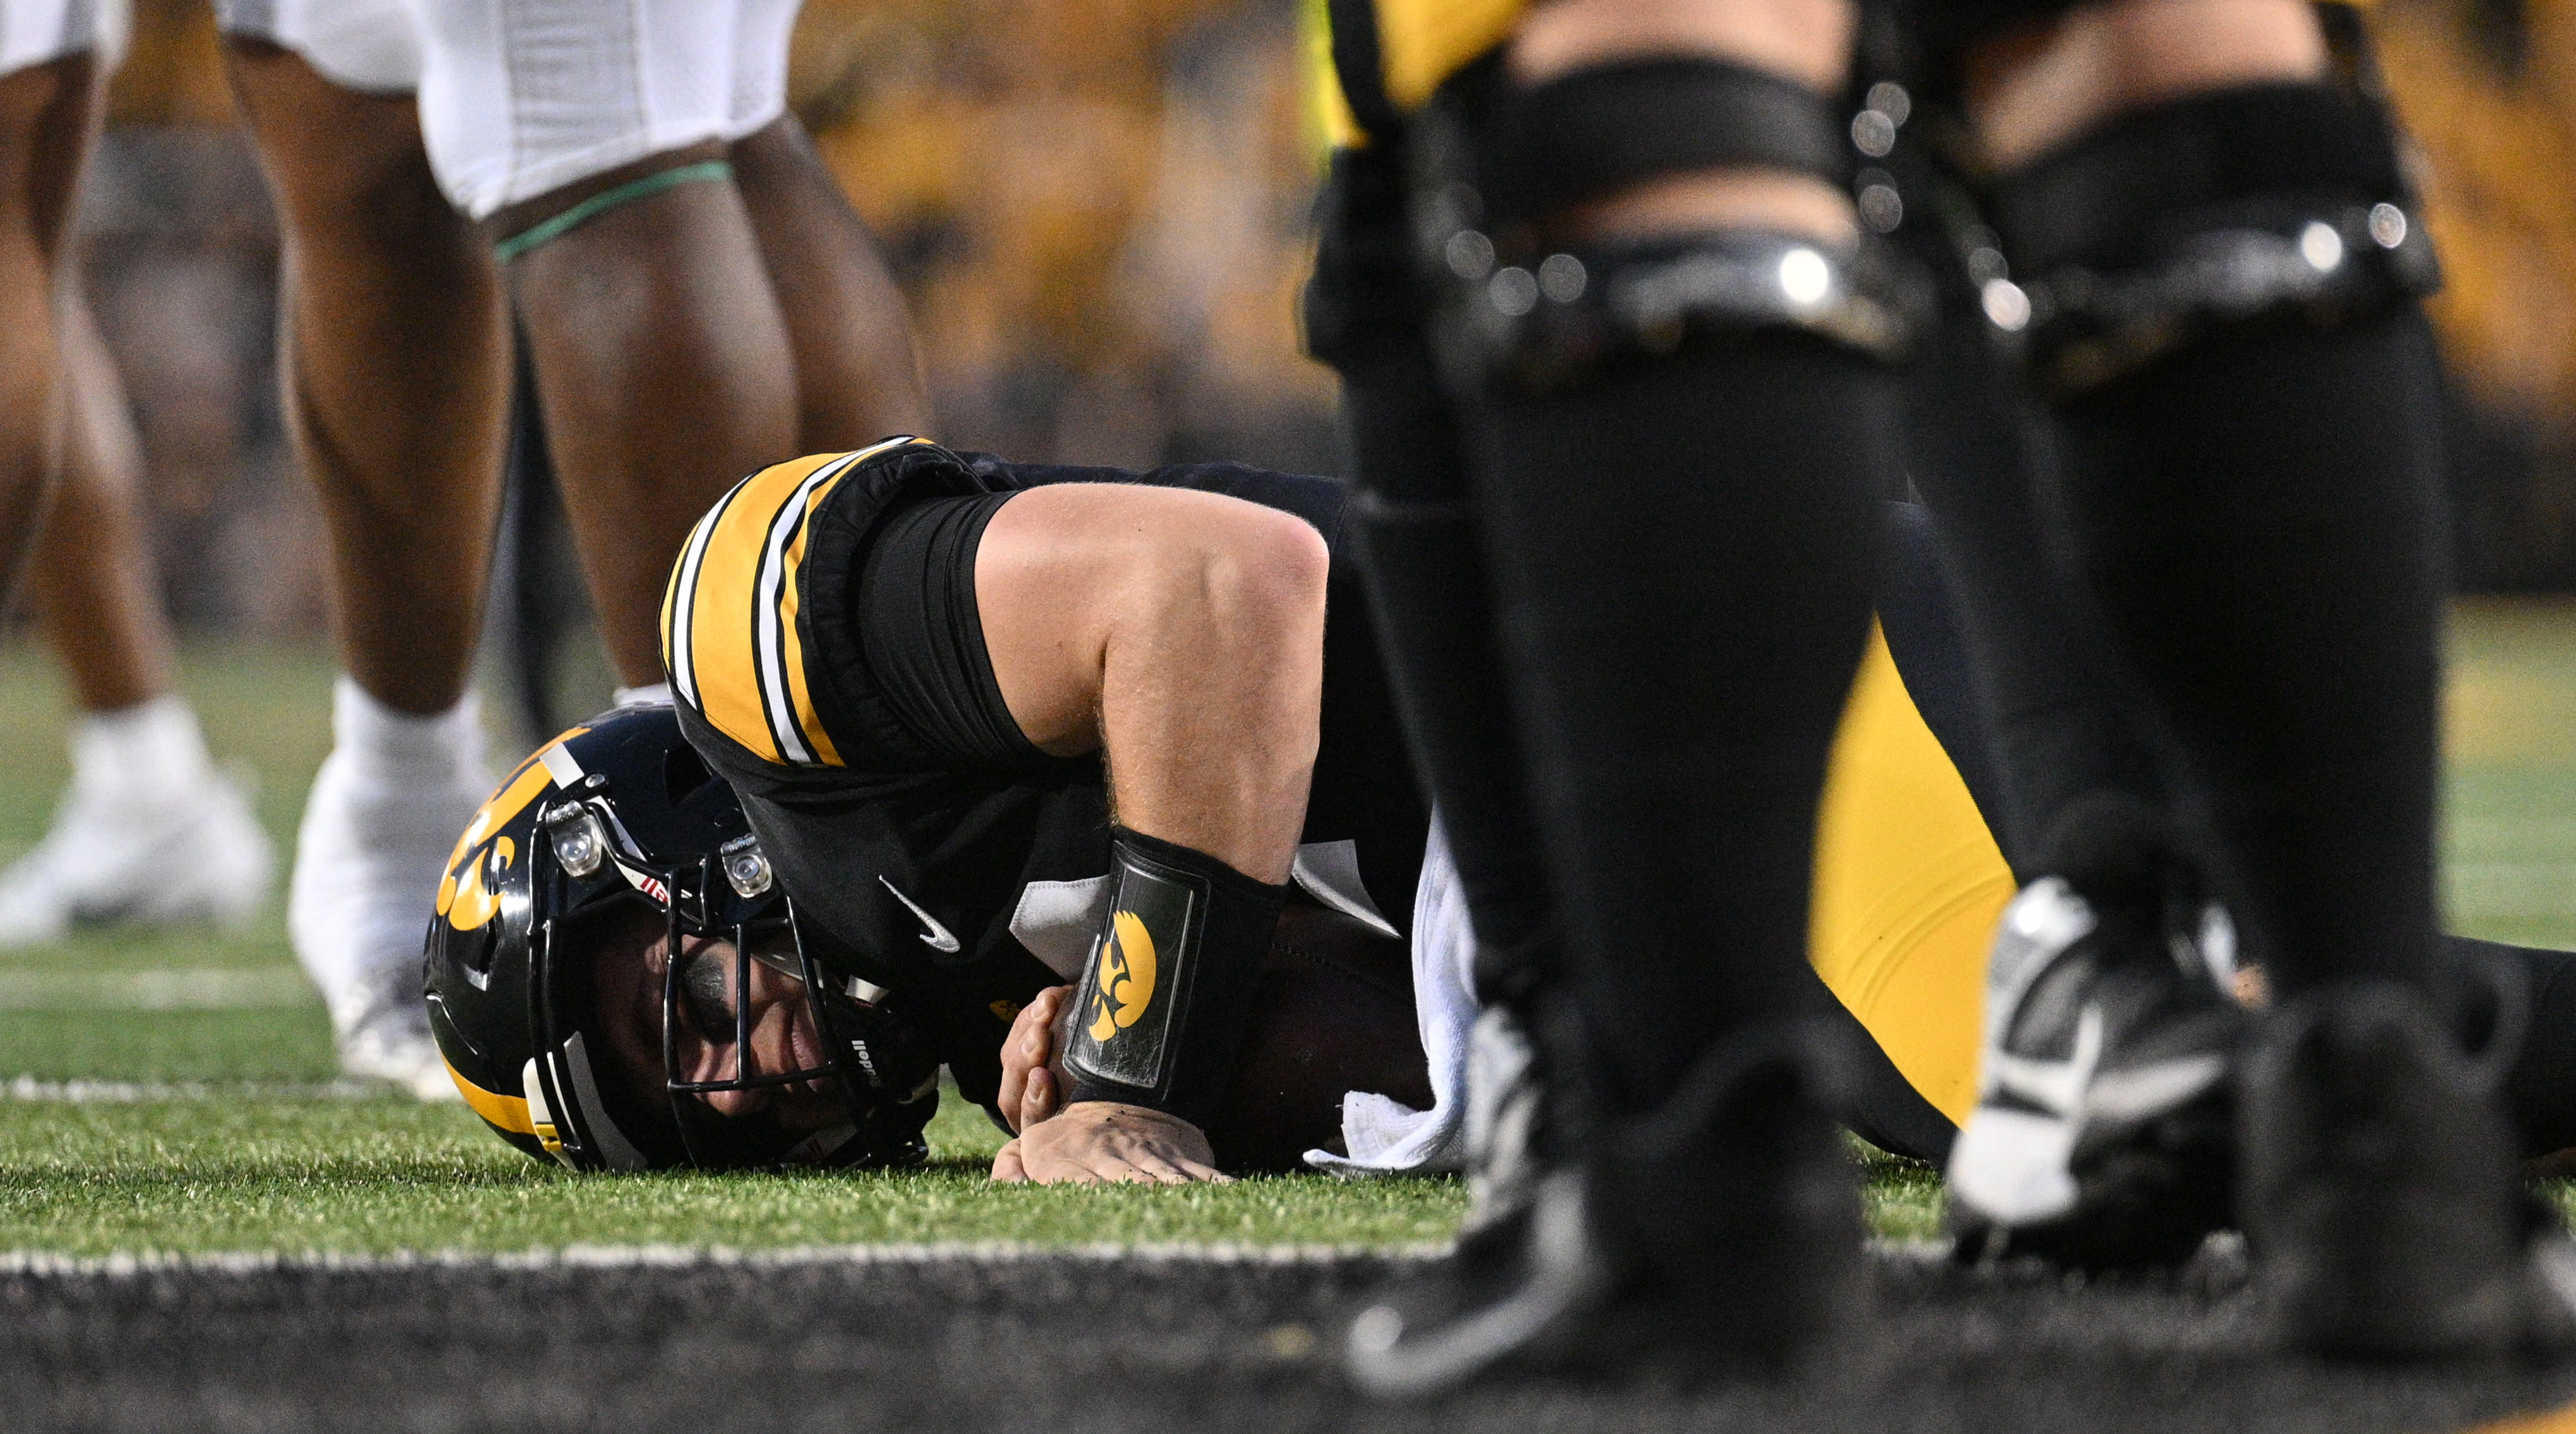 Iowa quarterback Cade McNamara lies on the ground after suffering a leg injury